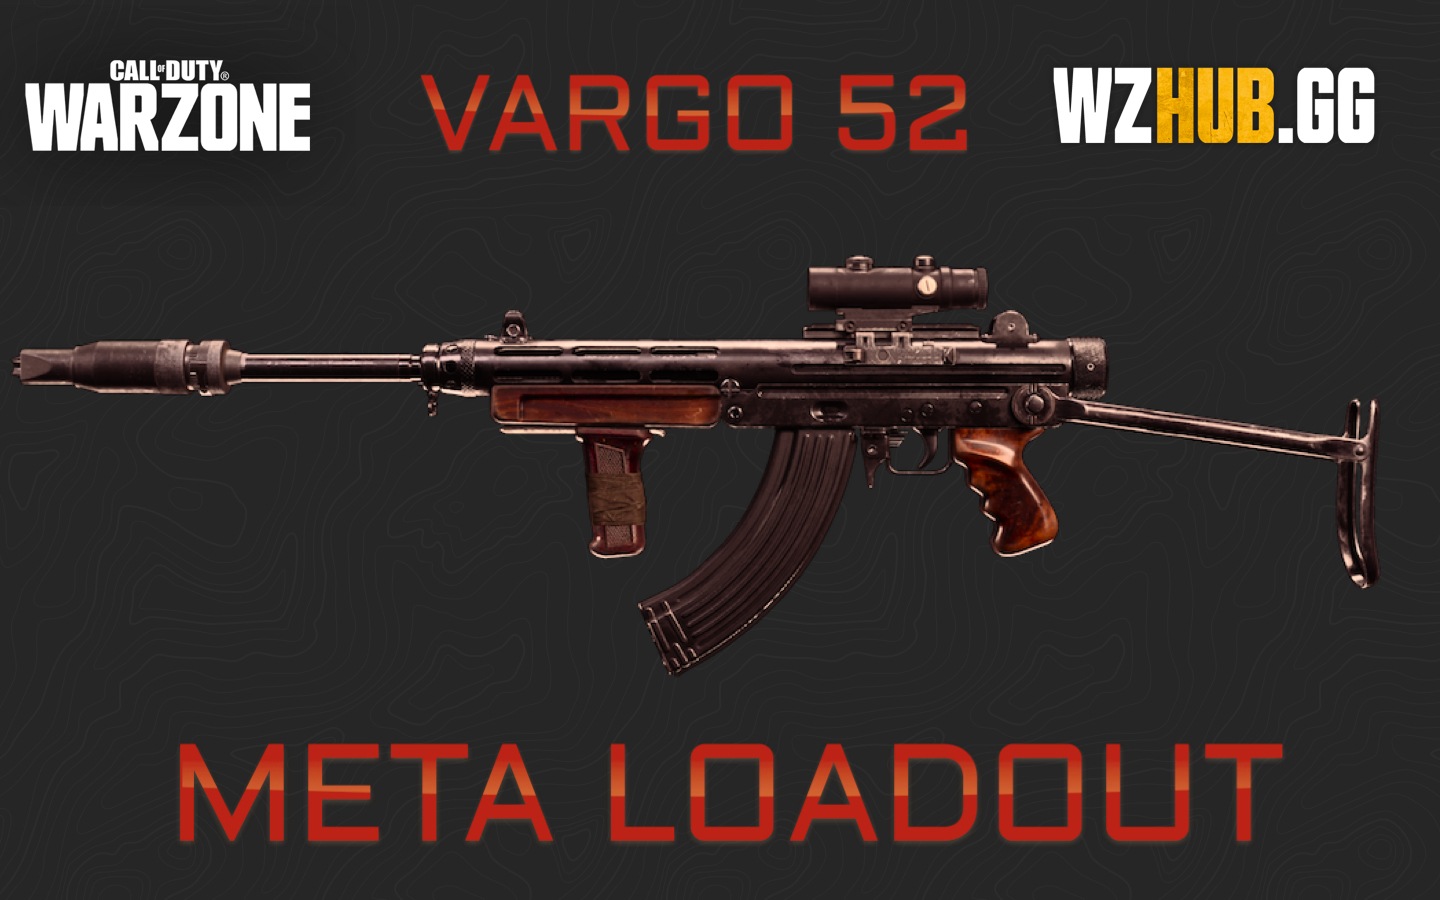 Vargo 52 Lastout